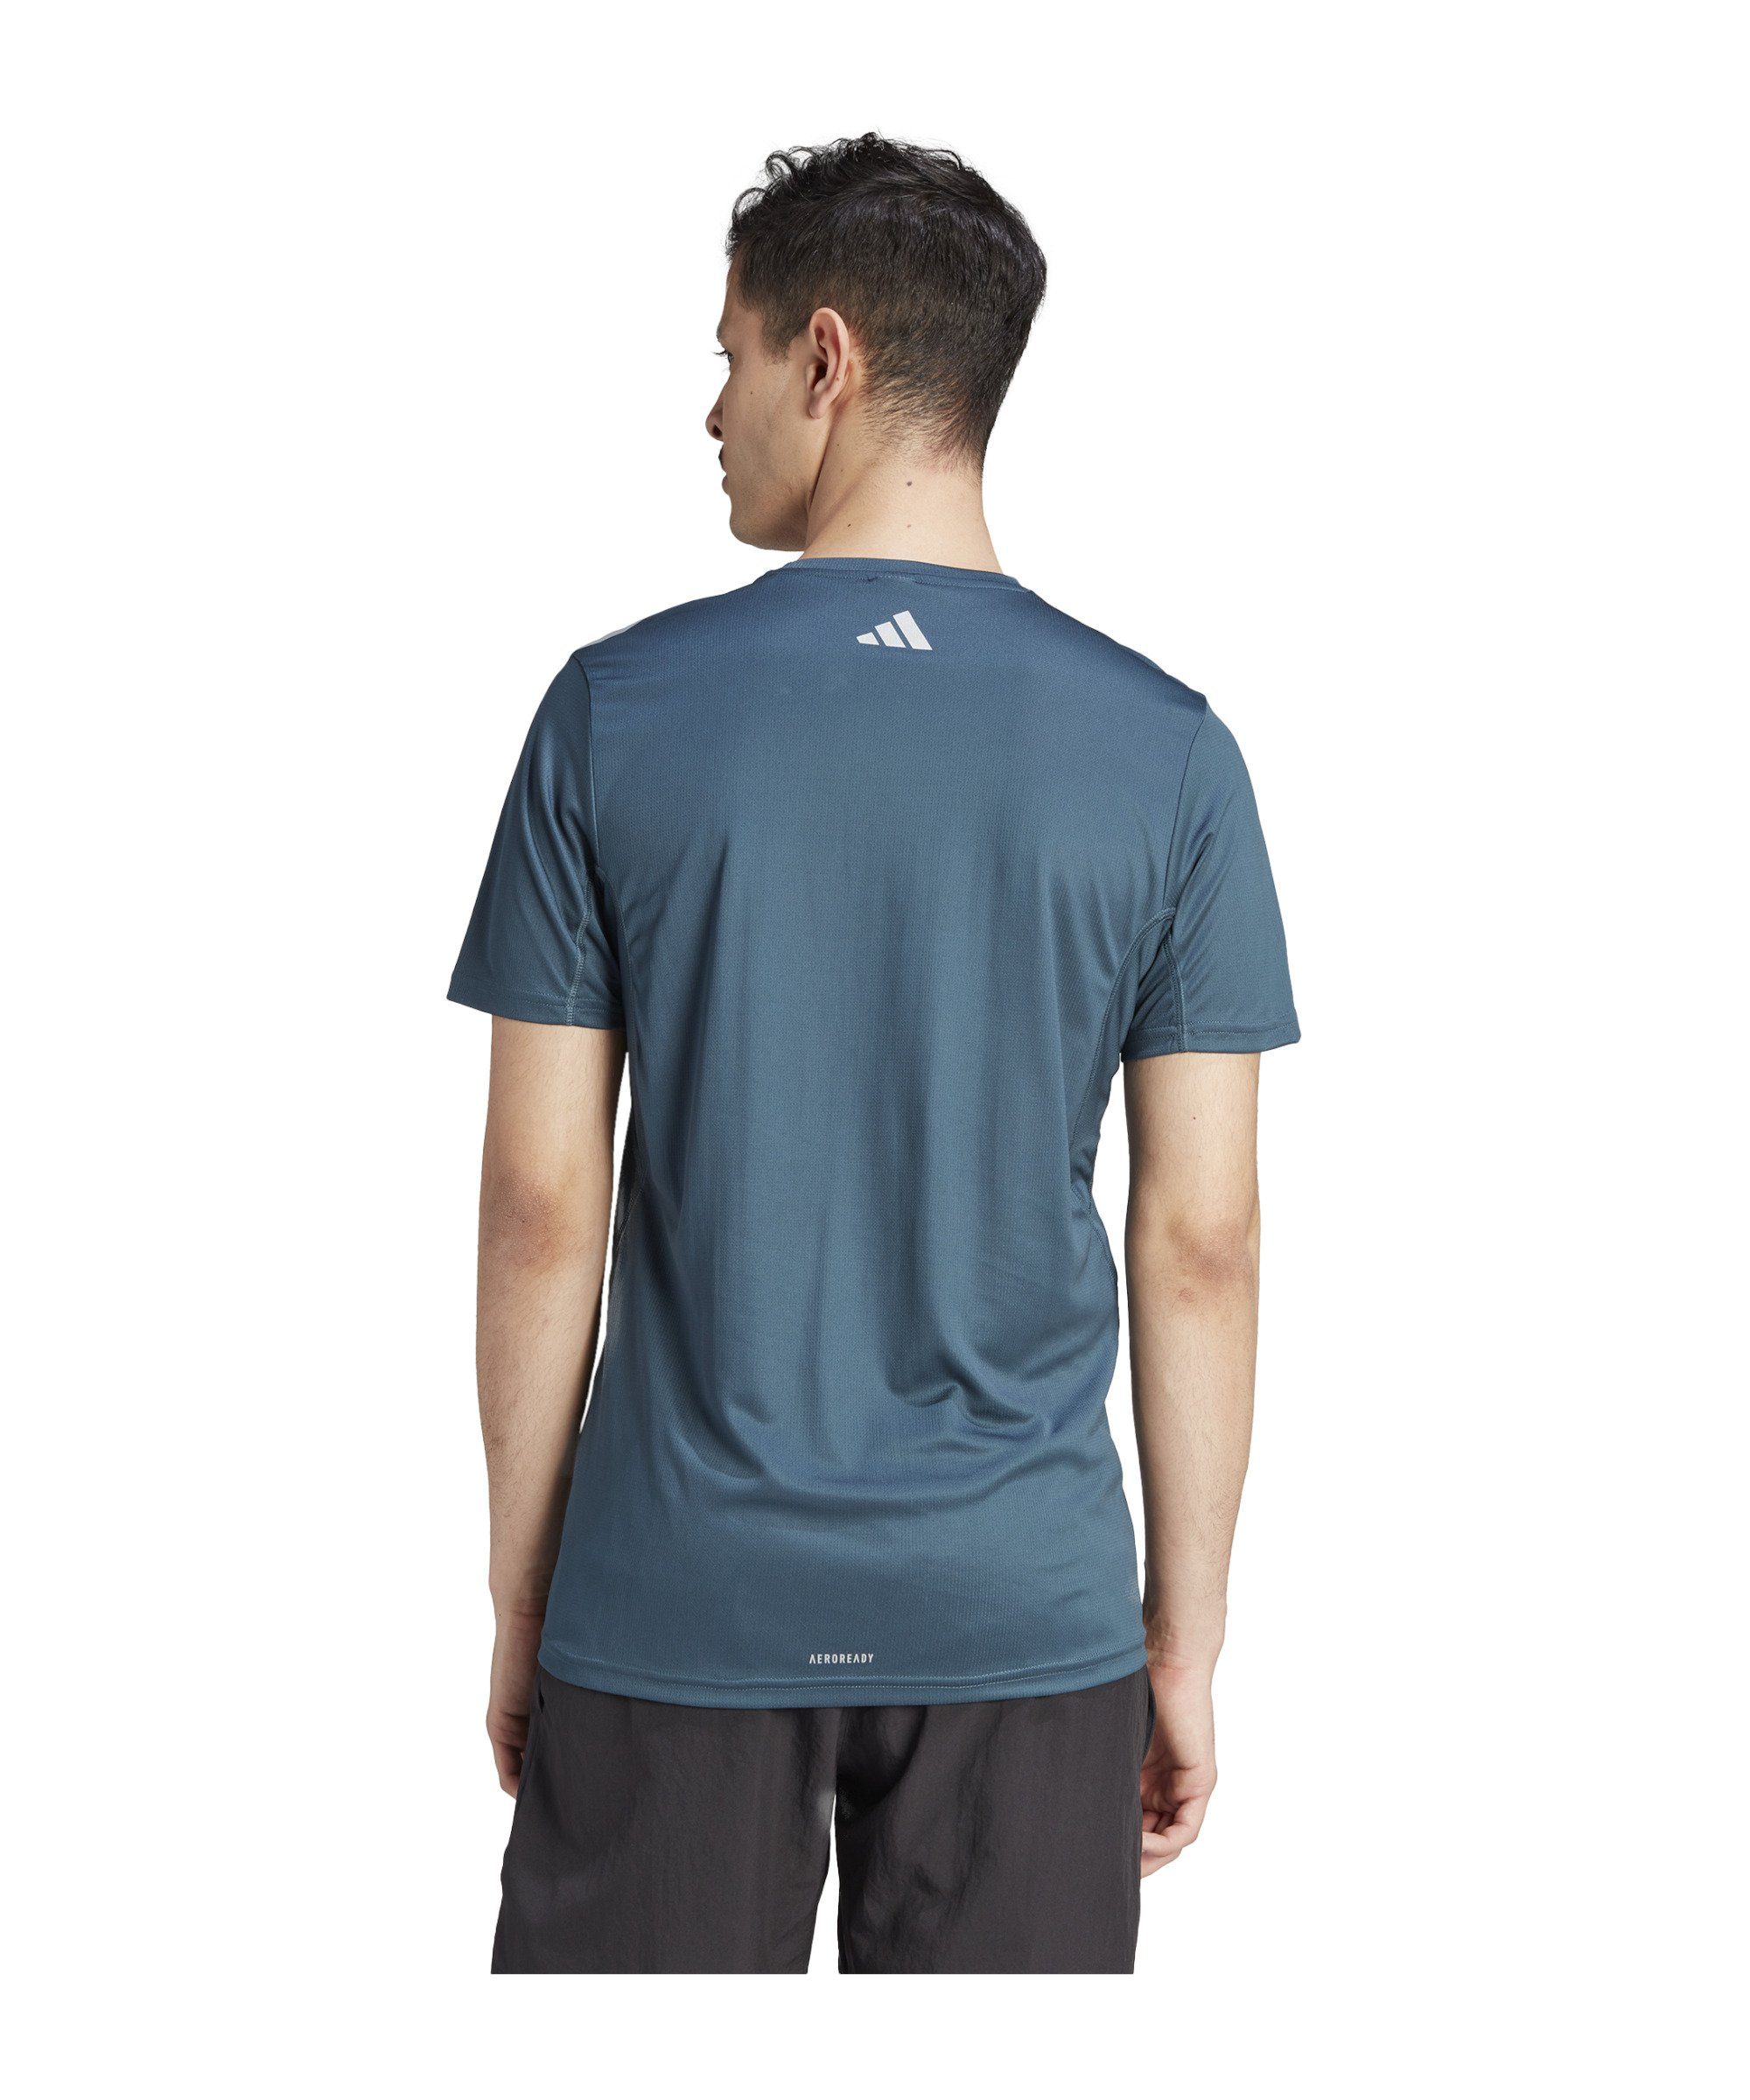 Performance T-Shirt T-Shirt 3Bar Run Icons default adidas